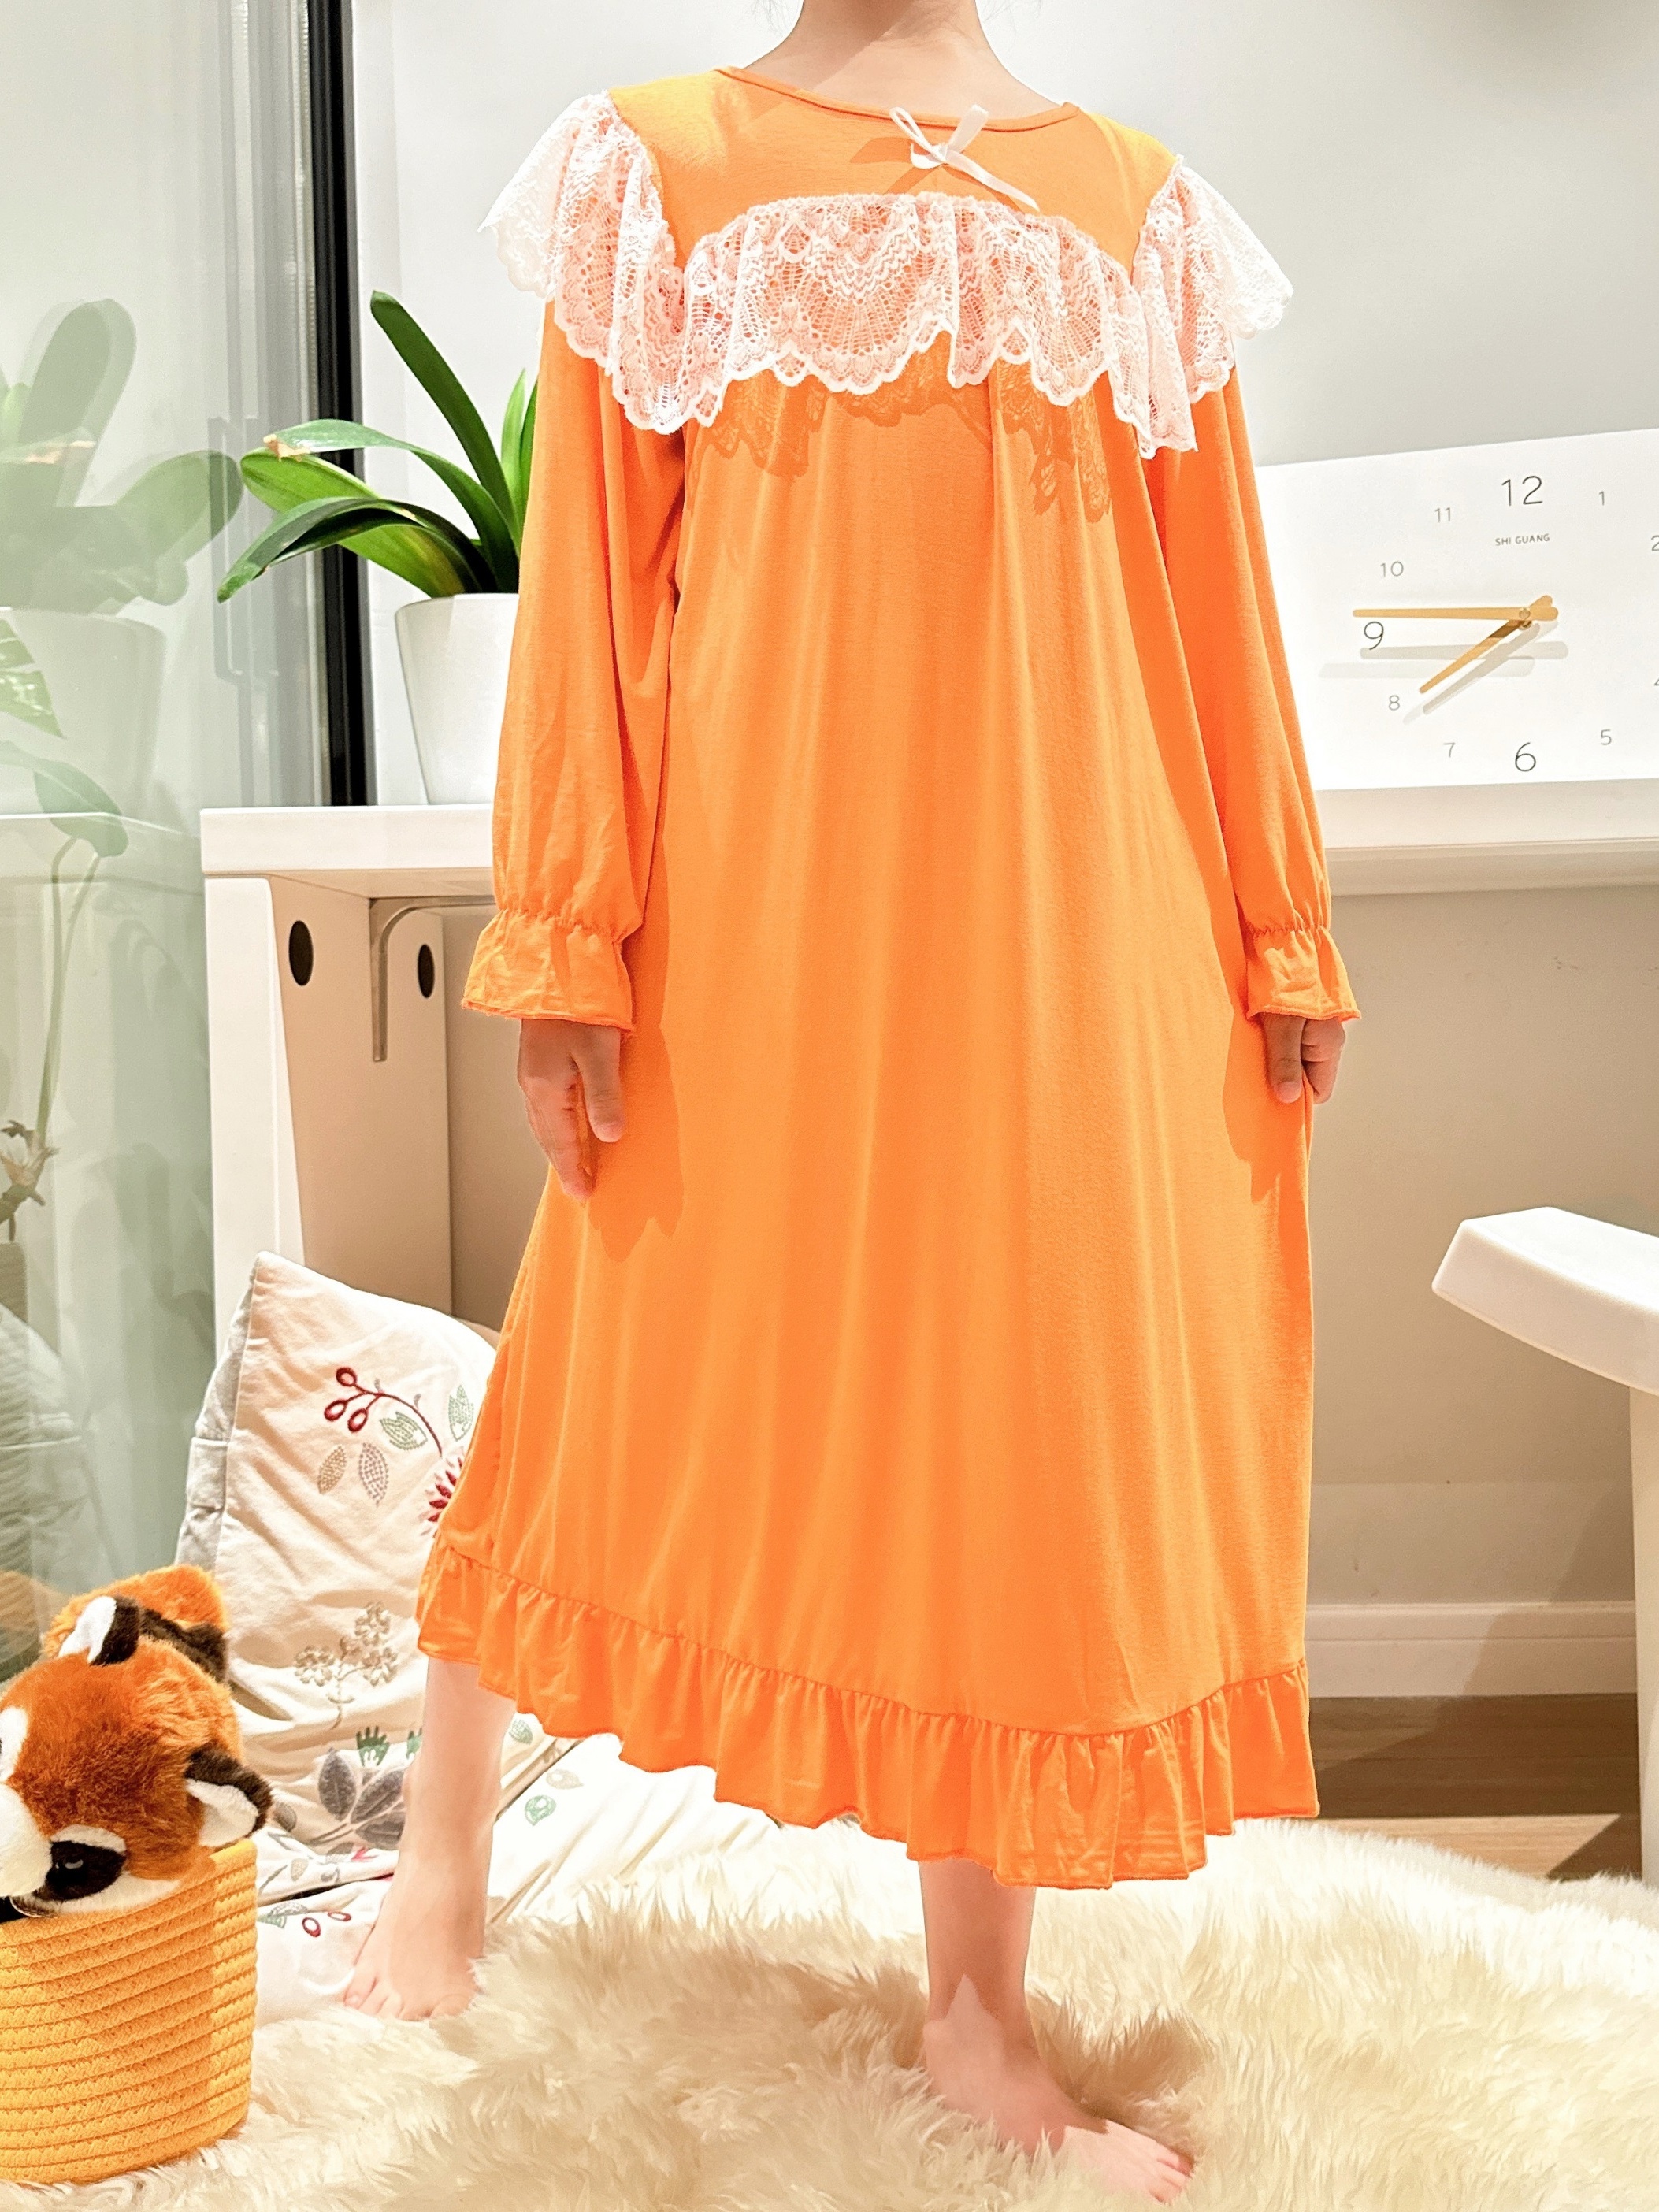 Lace O-neck Ruffle Nightgown Soft Cotton Sleepwear Cute Princess